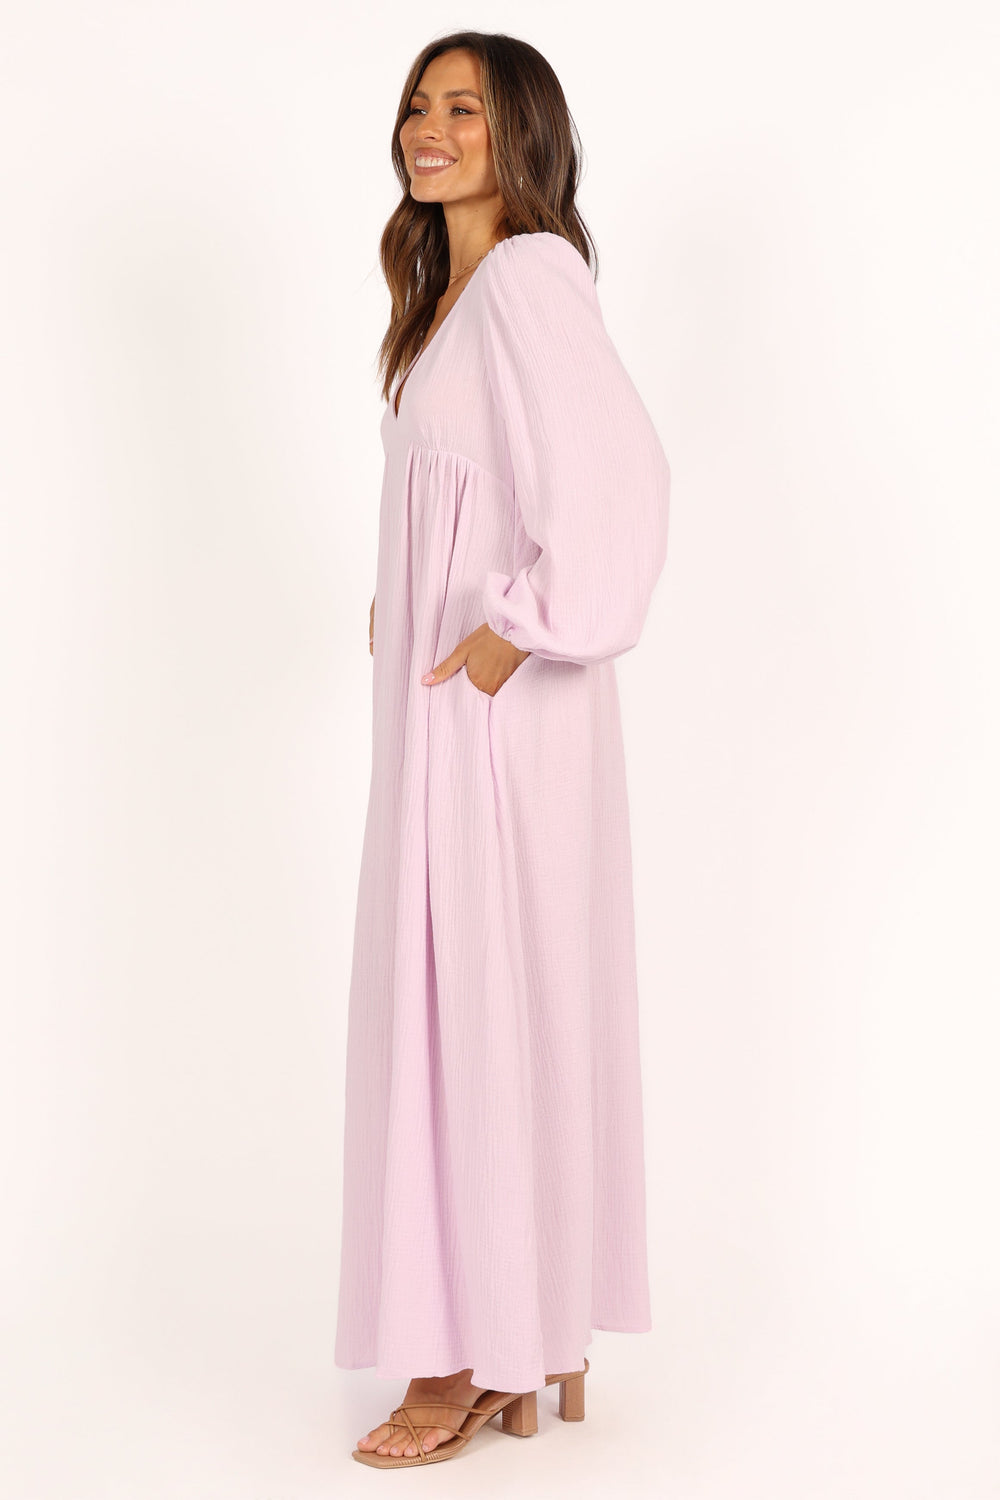 Petal and Pup USA DRESSES Willow Long Sleeve Maxi Dress - Lilac